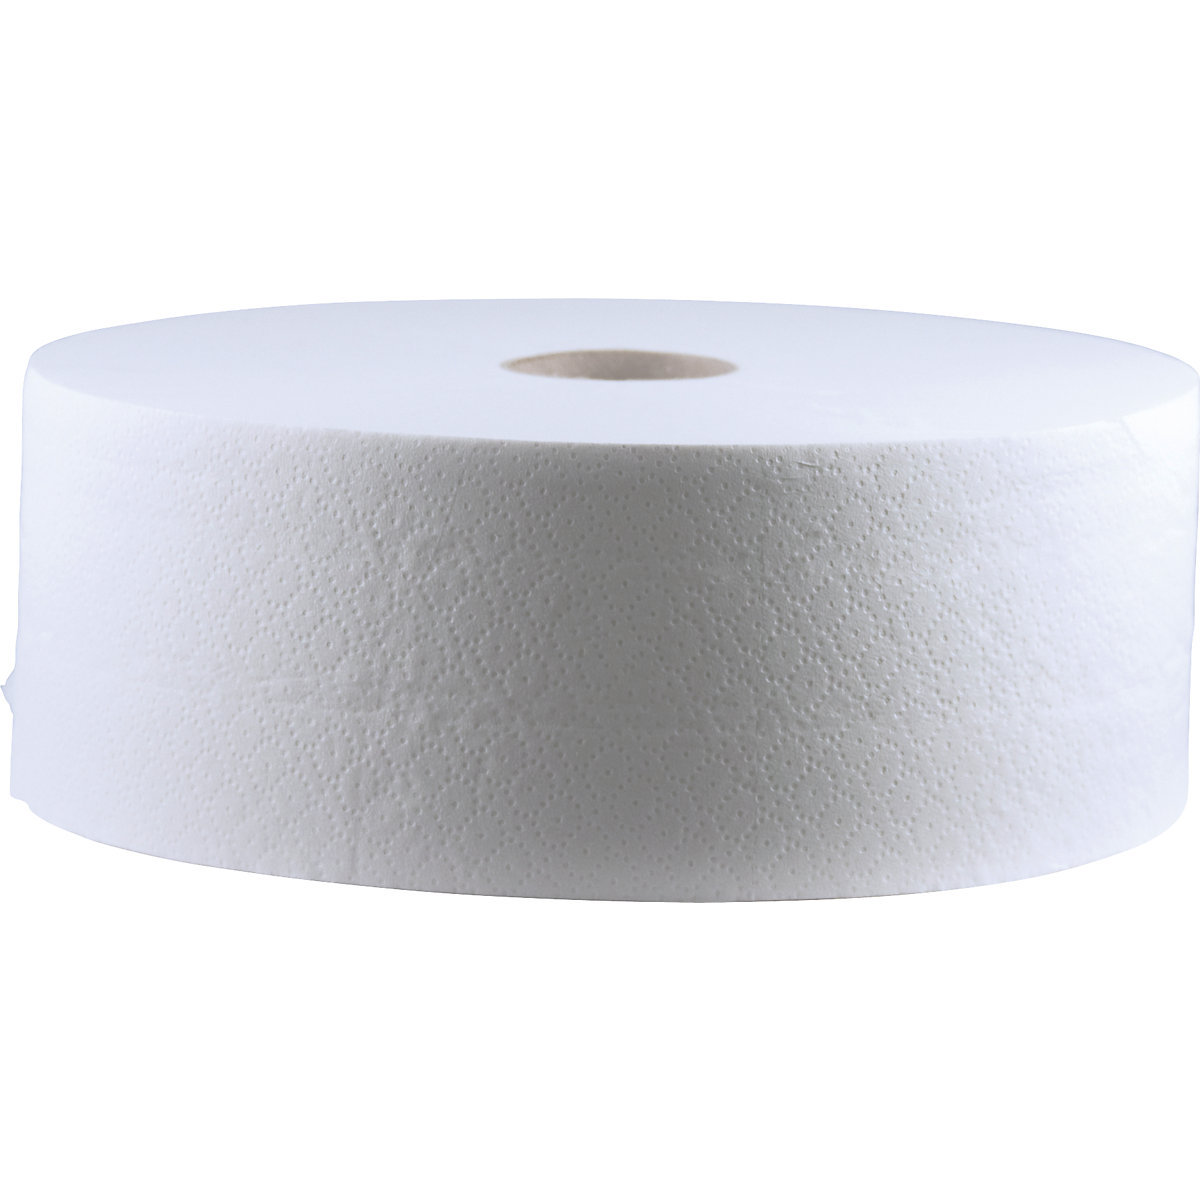 Velike role toaletnega papirja Tissue - CWS